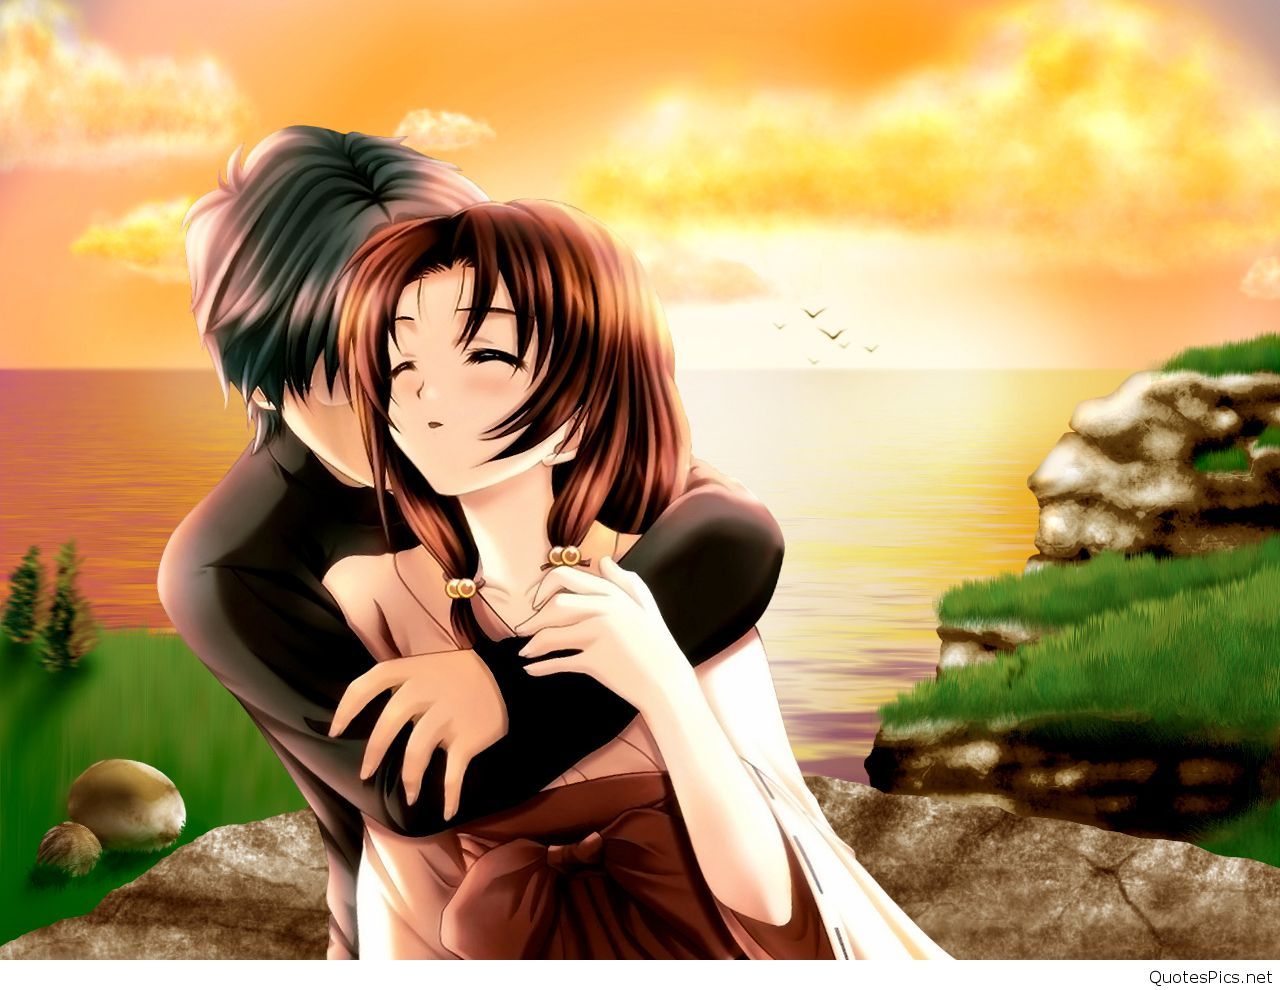 Top 146+ Imagenes de animes de amor para fondo de pantalla -  